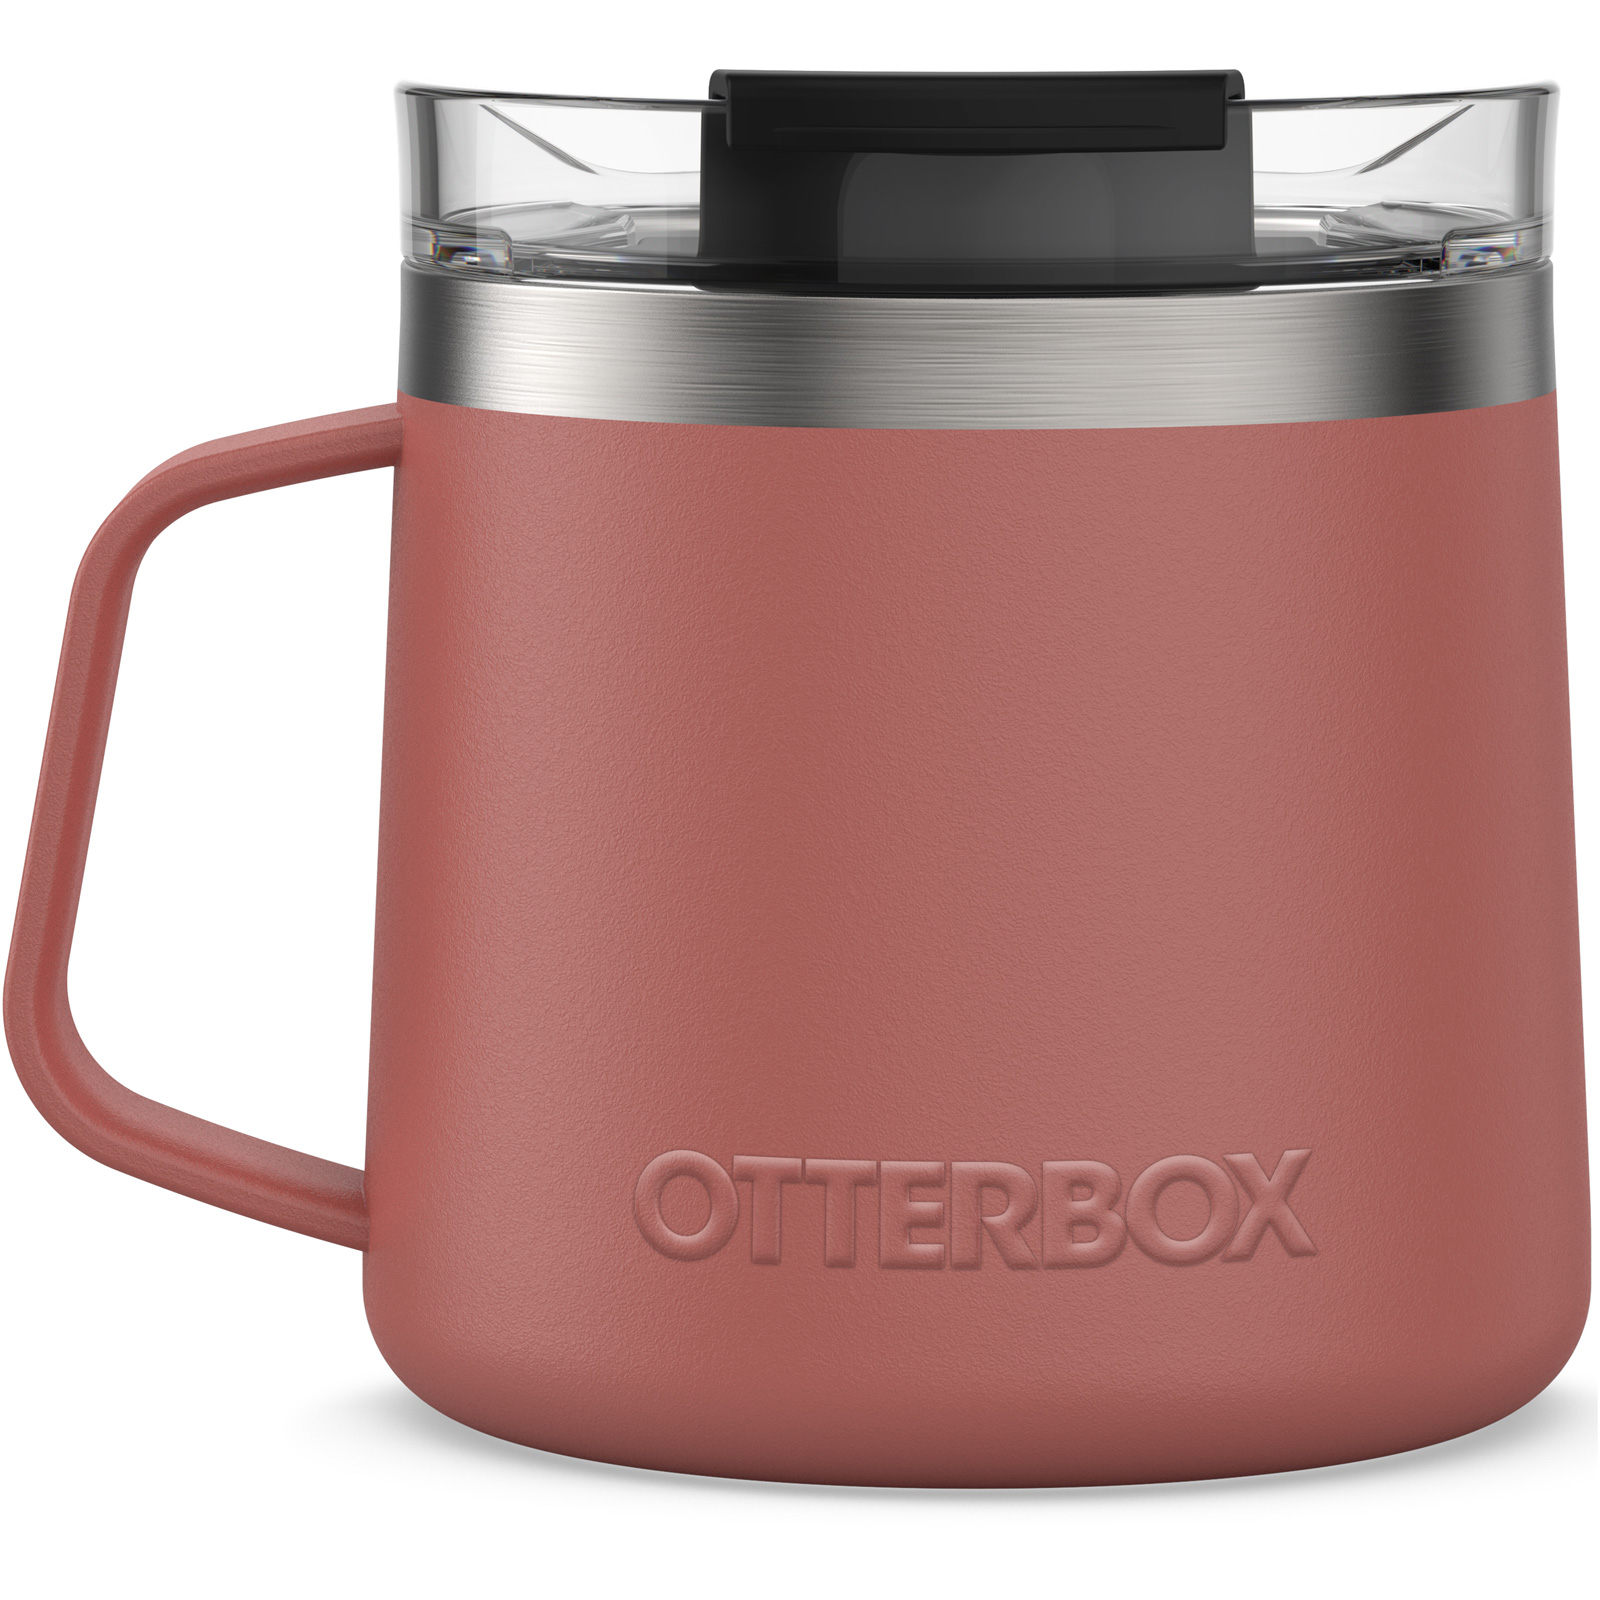 https://www.otterbox.com/on/demandware.static/-/Sites-masterCatalog/default/dw98078132/productimages/dis/outdoor/otr57-mug-14/otr57-mug-14-baked-1.jpg